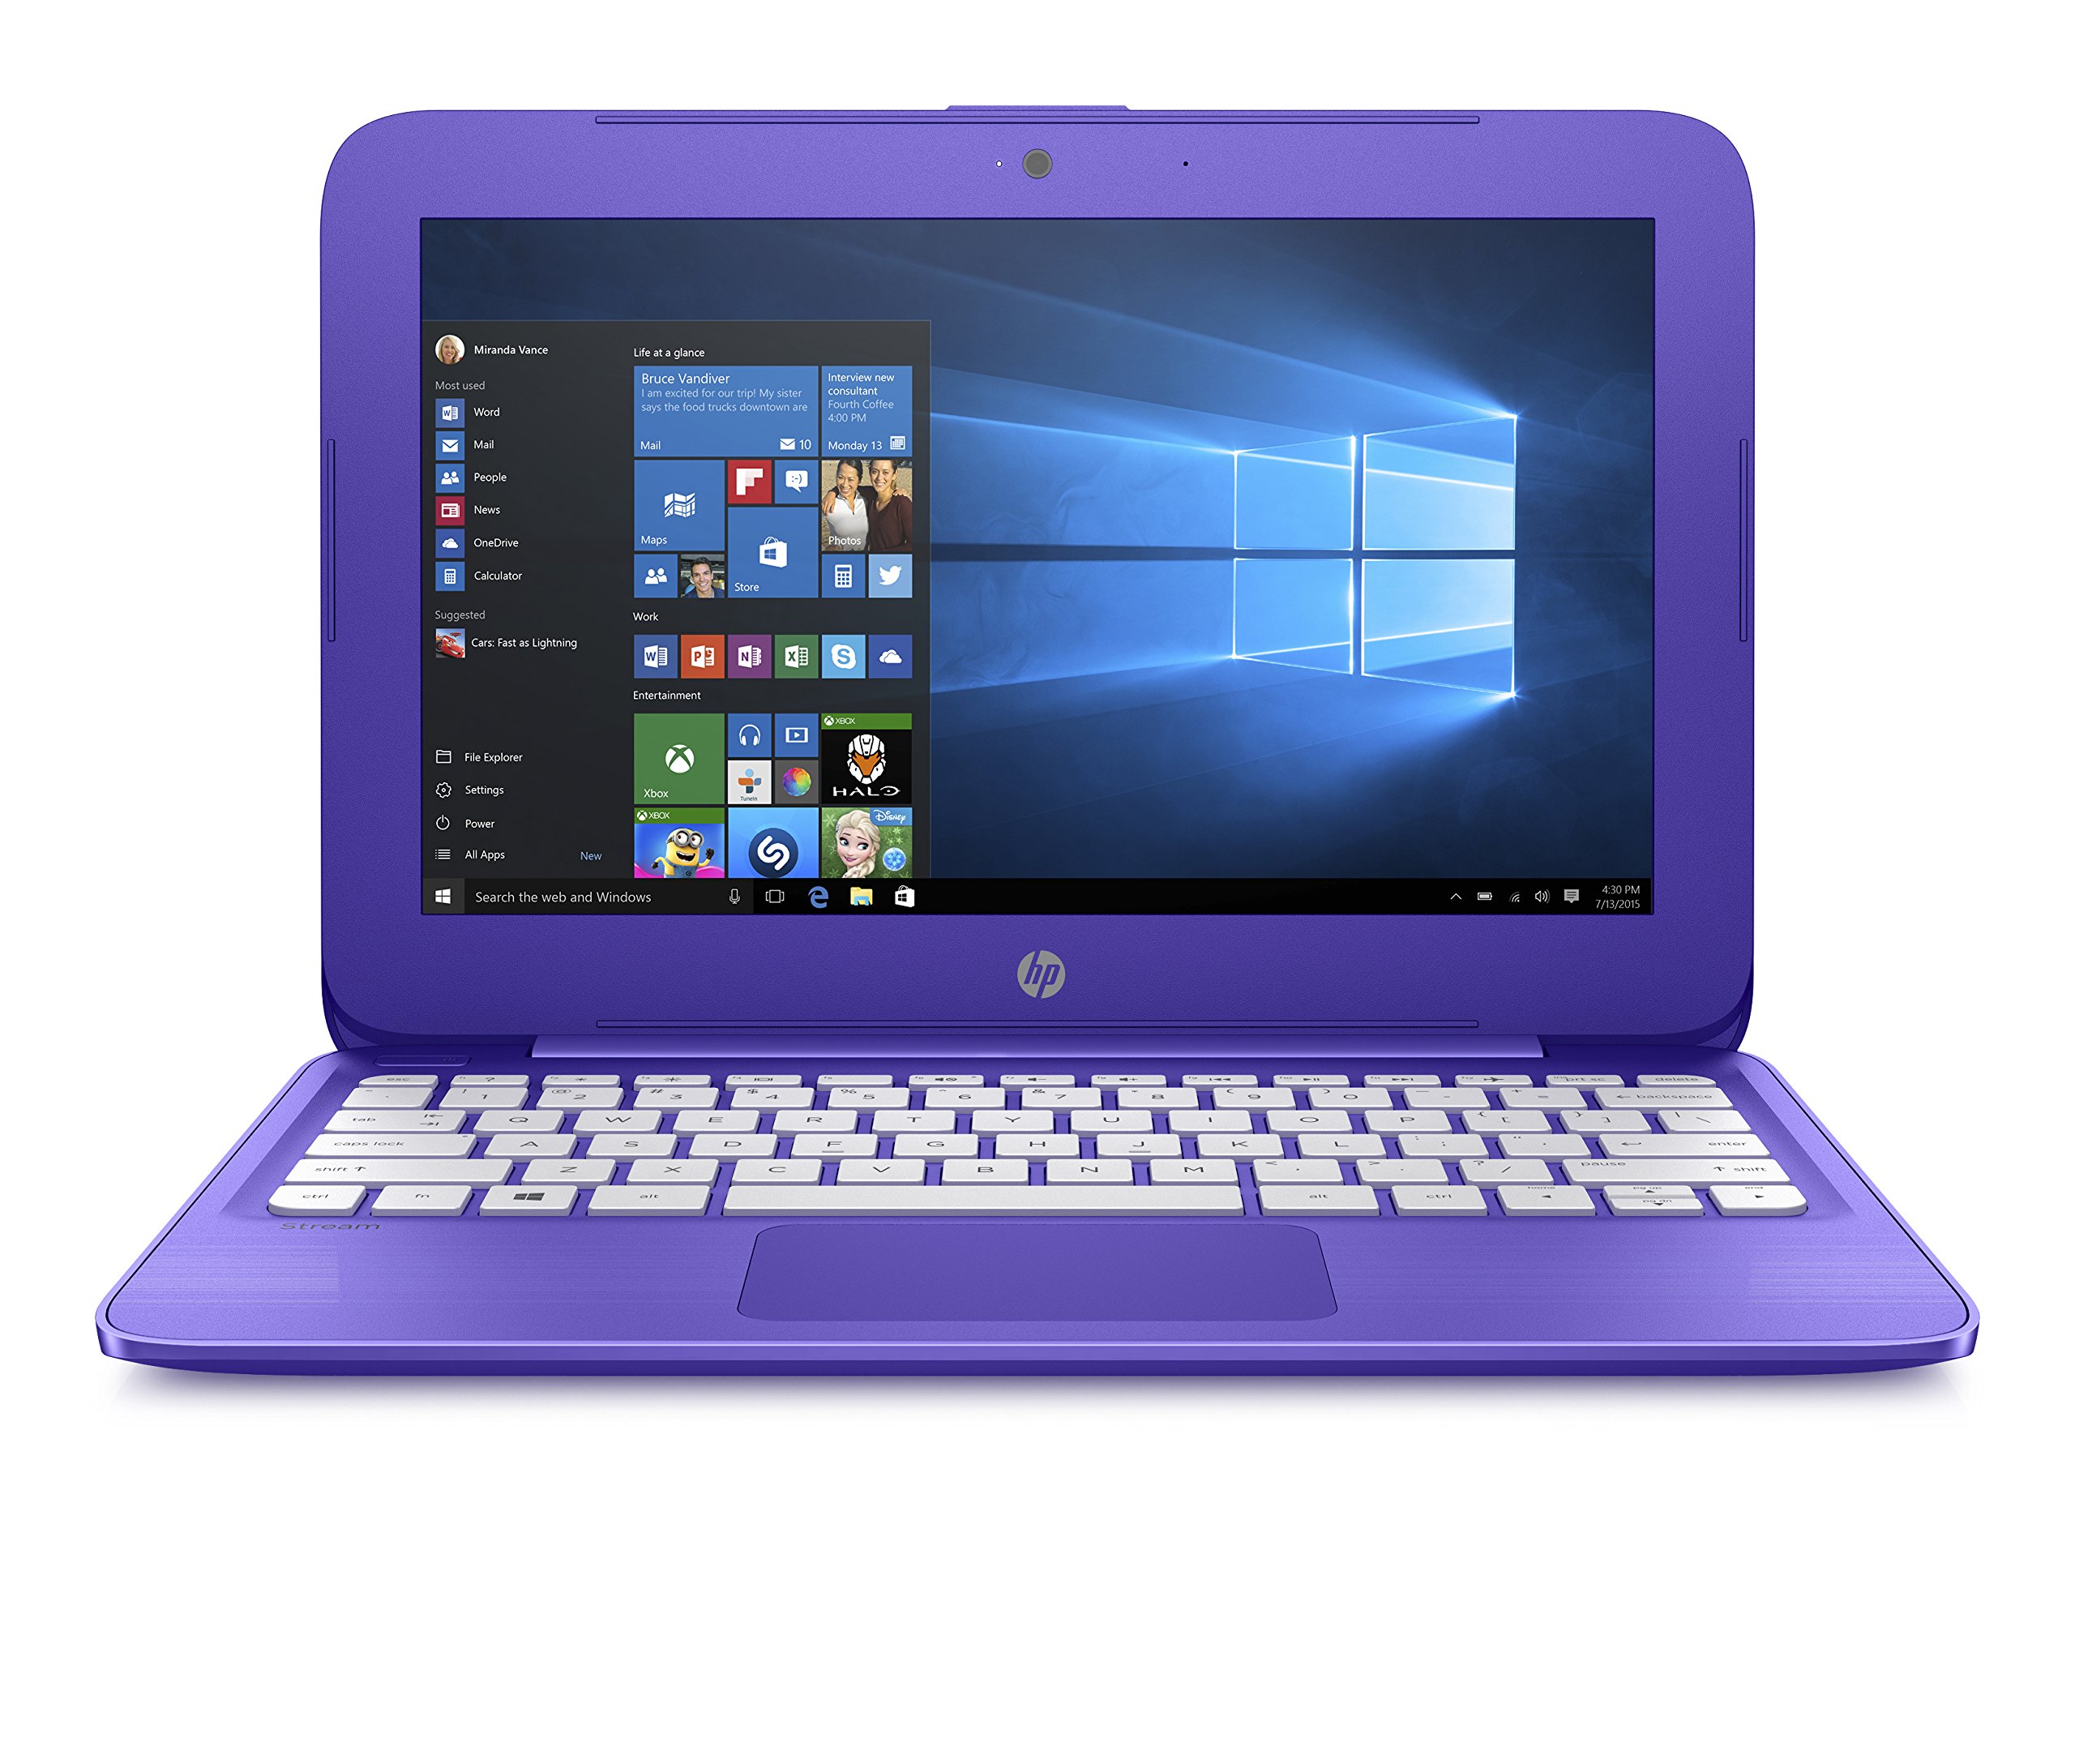 Book Cover HP Stream (11-ah120nr) 11.6 Inch Laptop with Intel Celeron N4000 Processor, 4GB RAM, 32 GB eMMC Storage, Office 365 Personal 1-Year Included, Windows 10 (Infinity Purple)